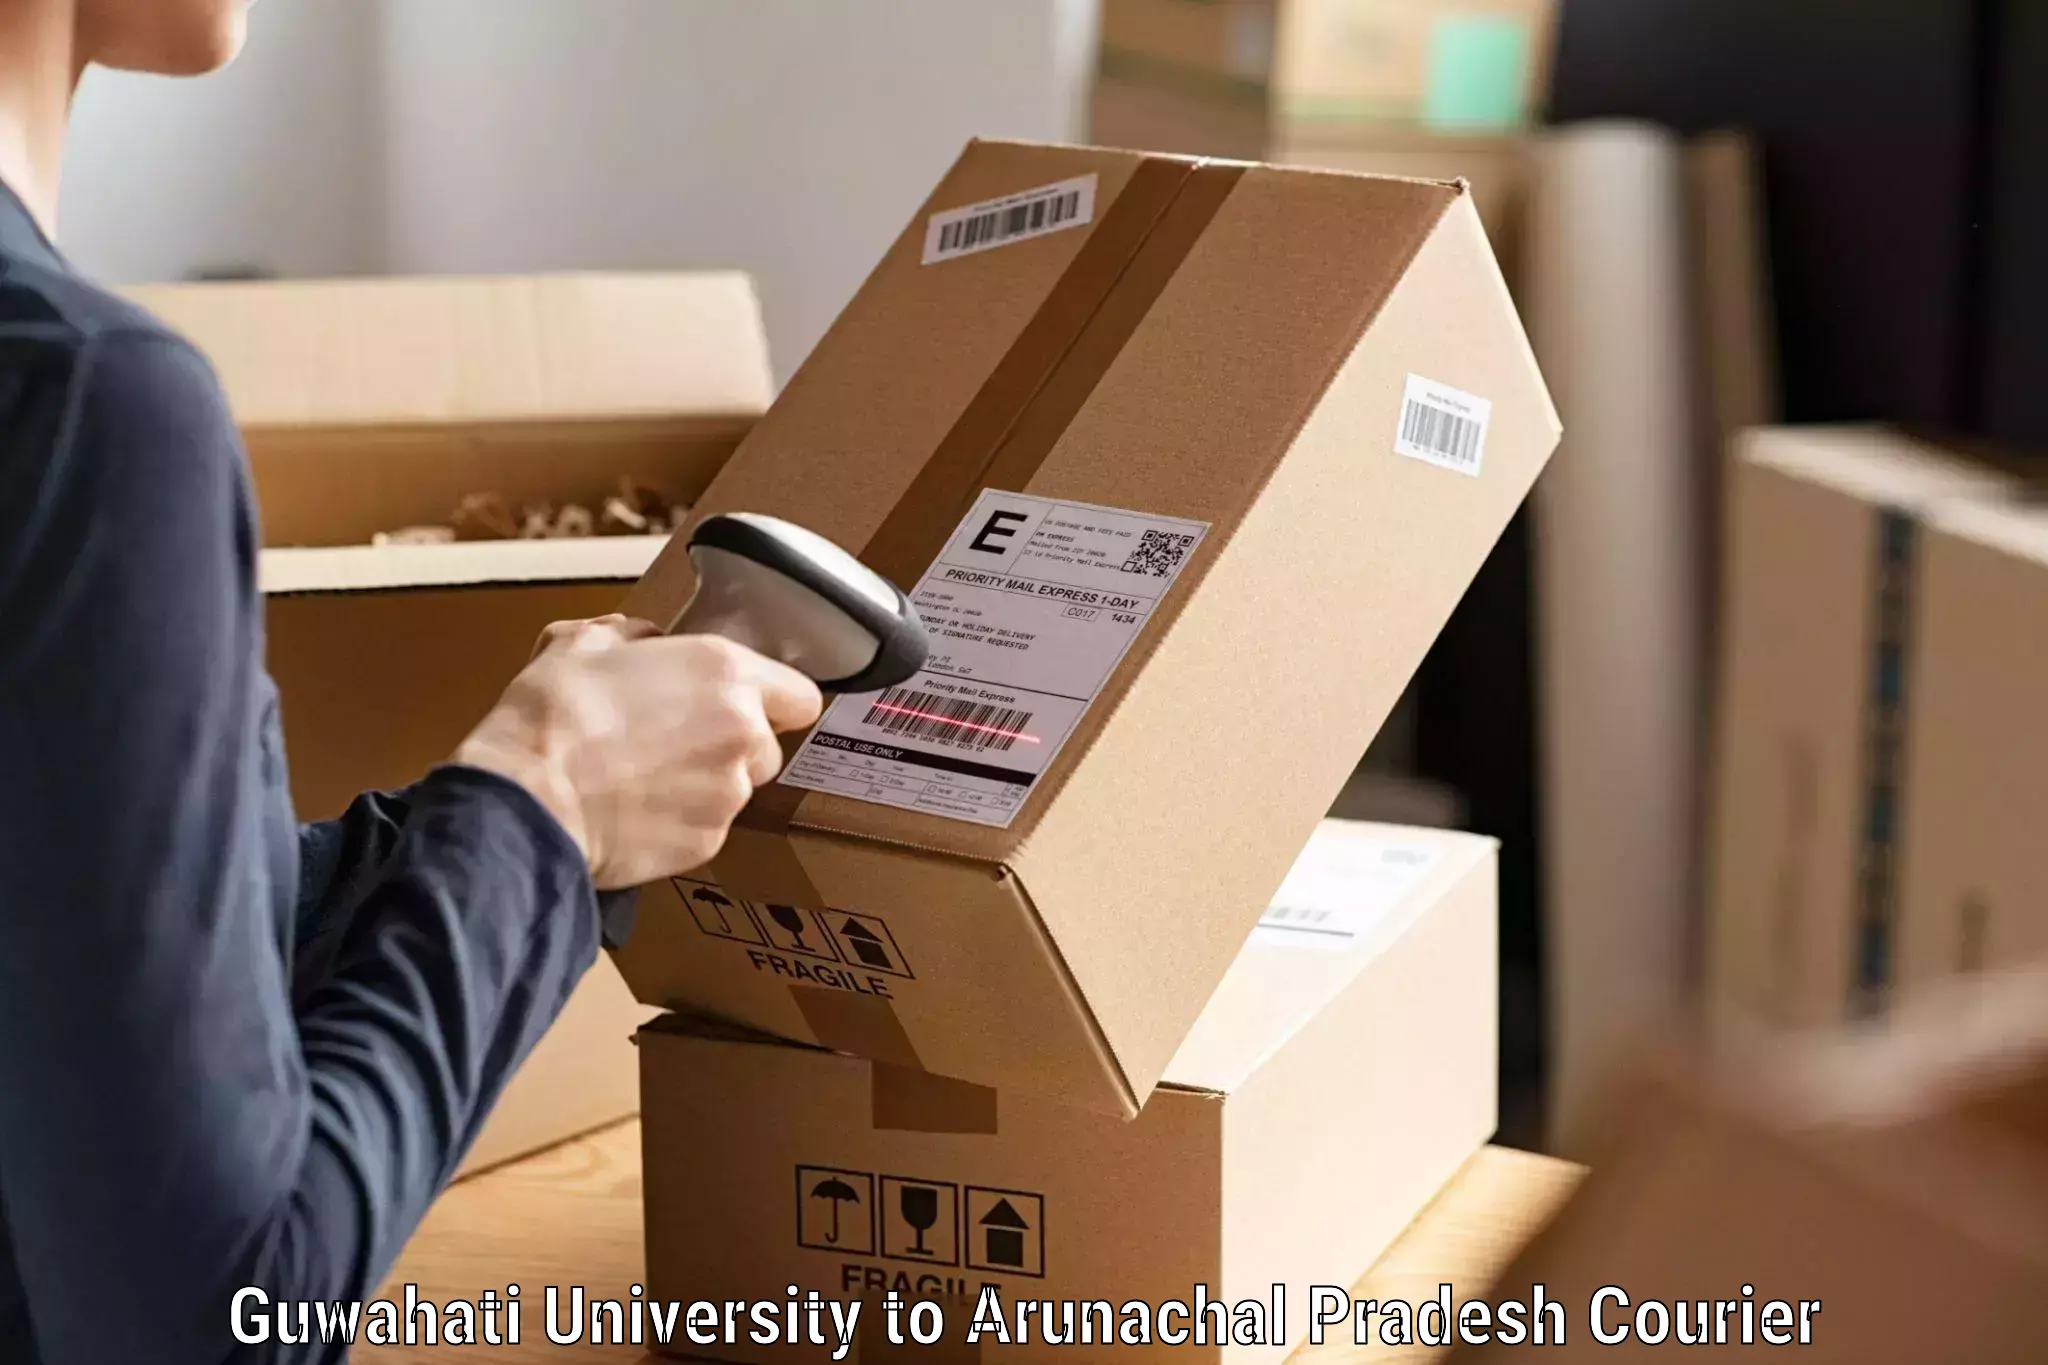 International parcel service Guwahati University to Changlang